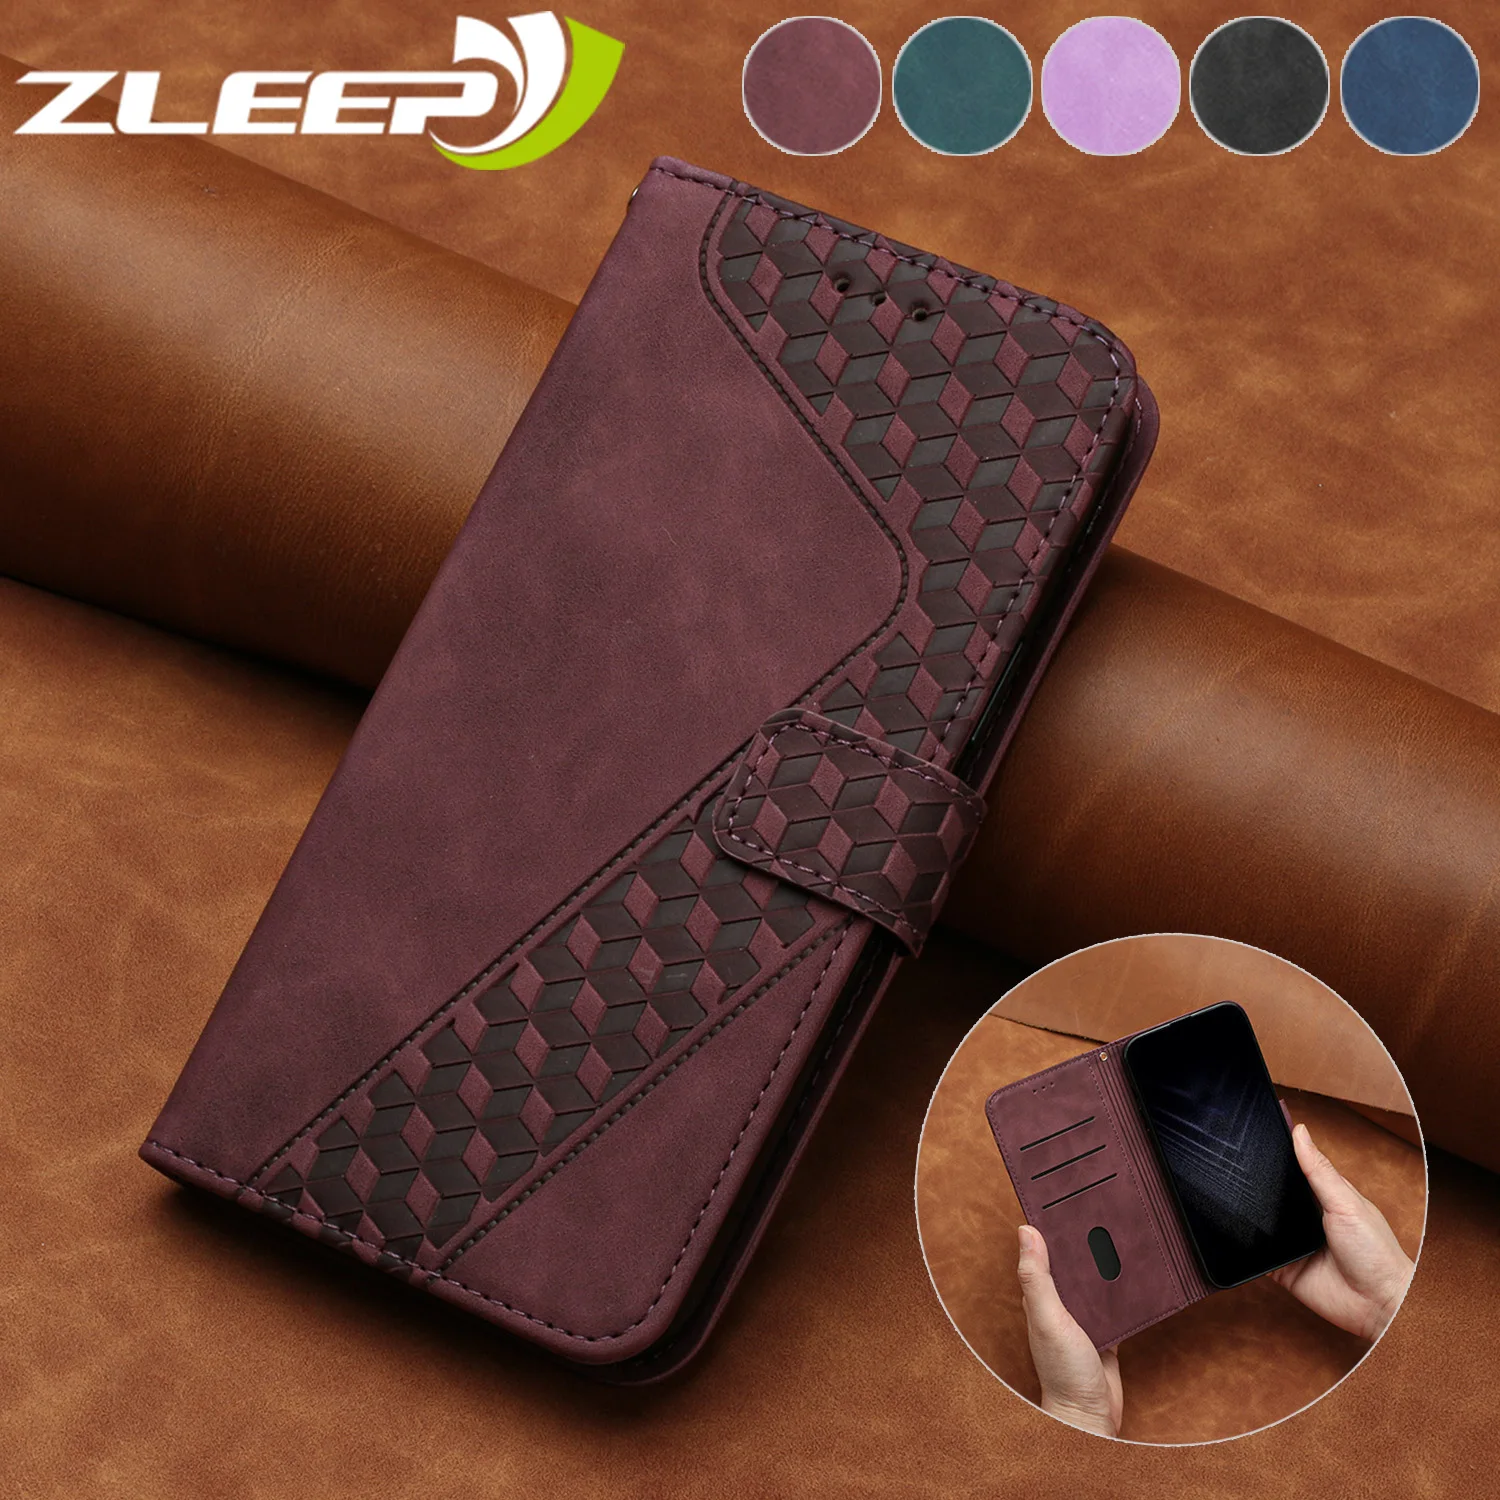 

Luxury Leather Flip Wallet Case For Samsung Galaxy A71 A51 A41 A31 A21 A11 A01 A70 A50 A40 A30 A20 A10 S E A81 A91 Cards Cover